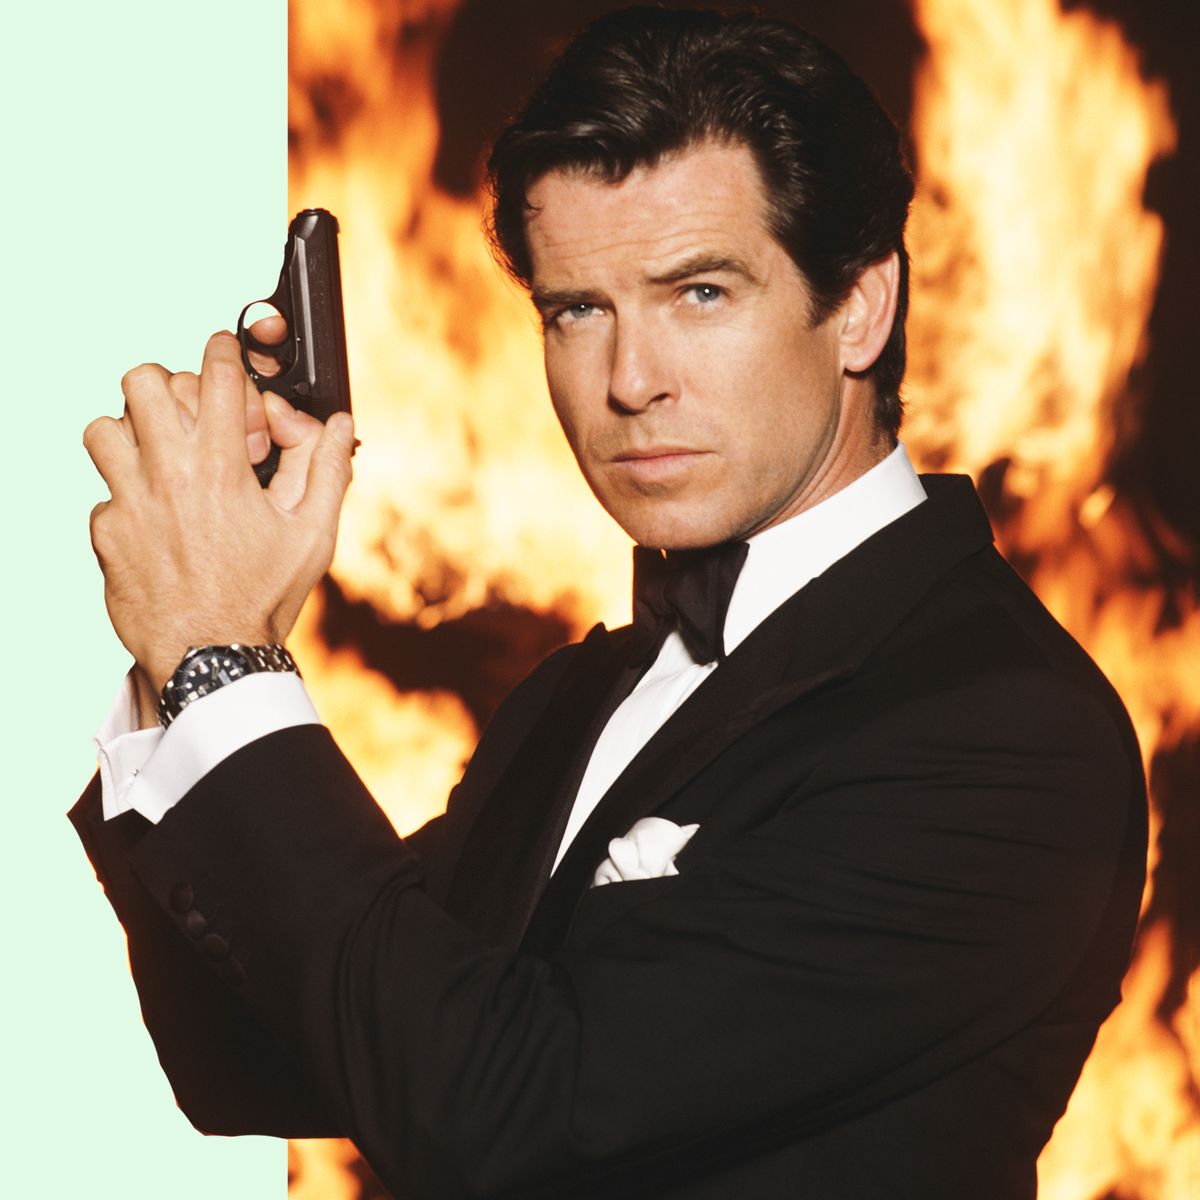 James Bond movie: James Bond producer rules out three Hollywood A